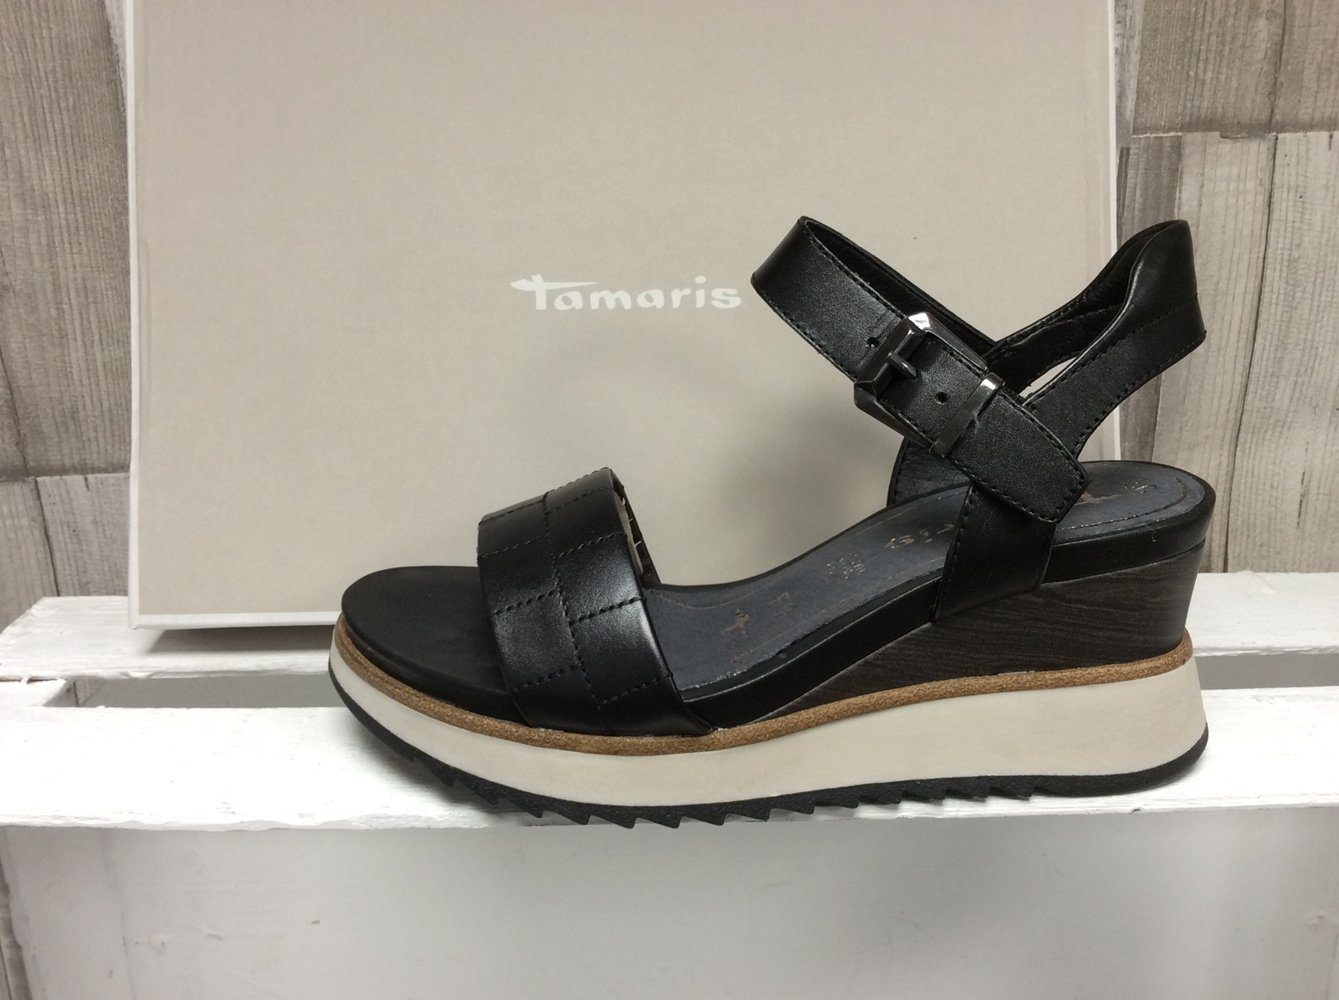 Tamaris mit Tamaris Sandalette heller schwarz Keil-Sandale Sohle Damen